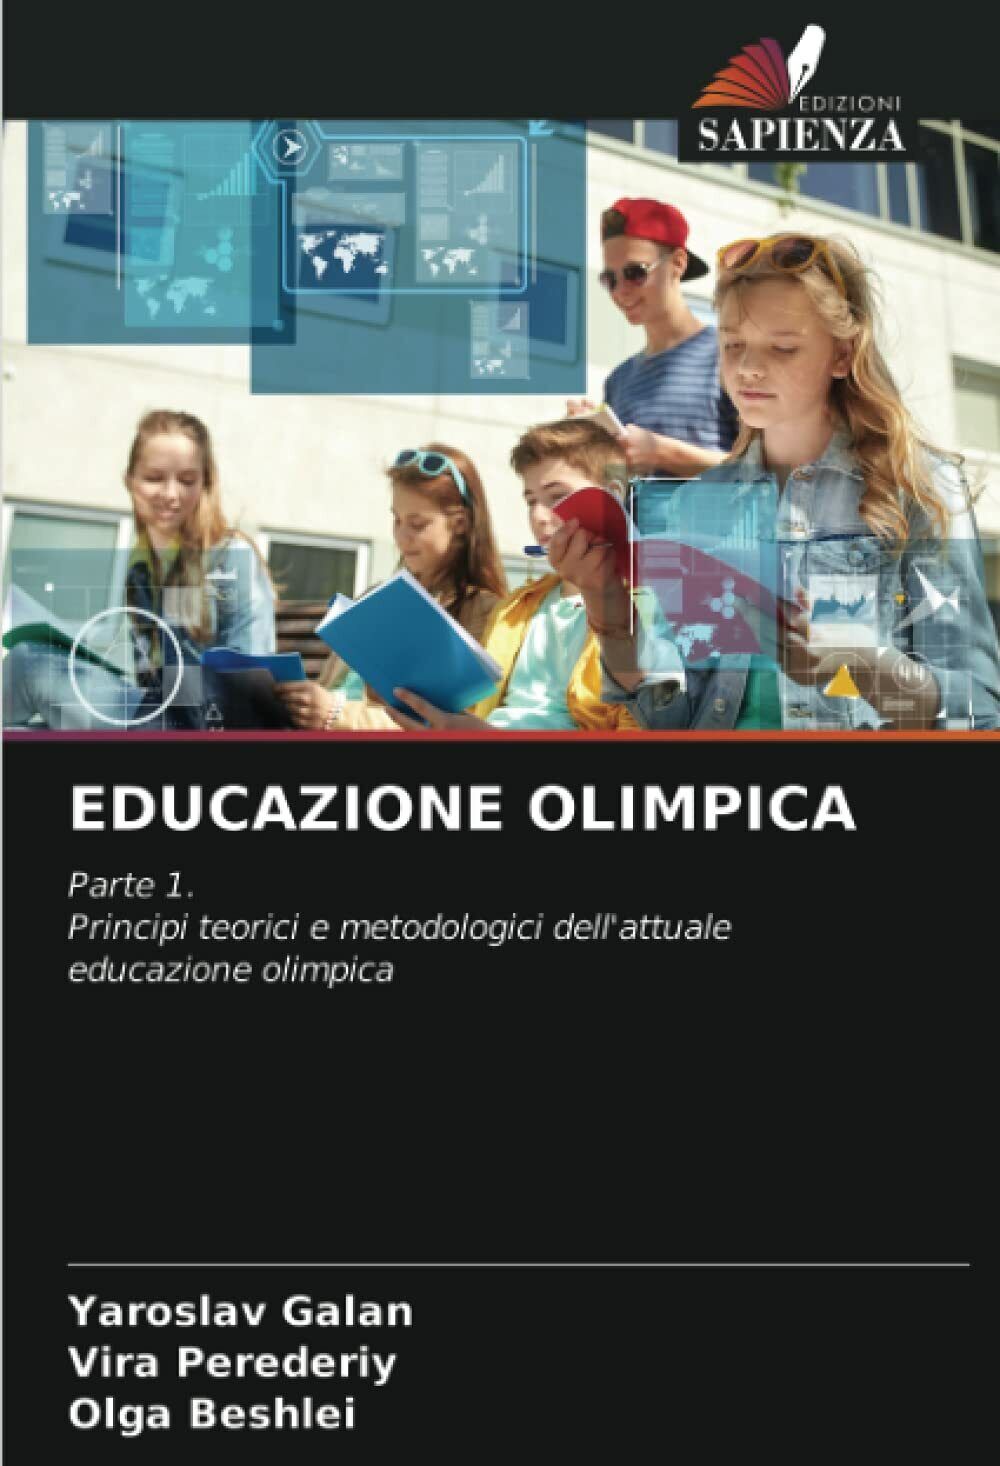 EDUCAZIONE OLIMPICA - Galan,Perederiy, Beshlei - Sapienza, 2021 